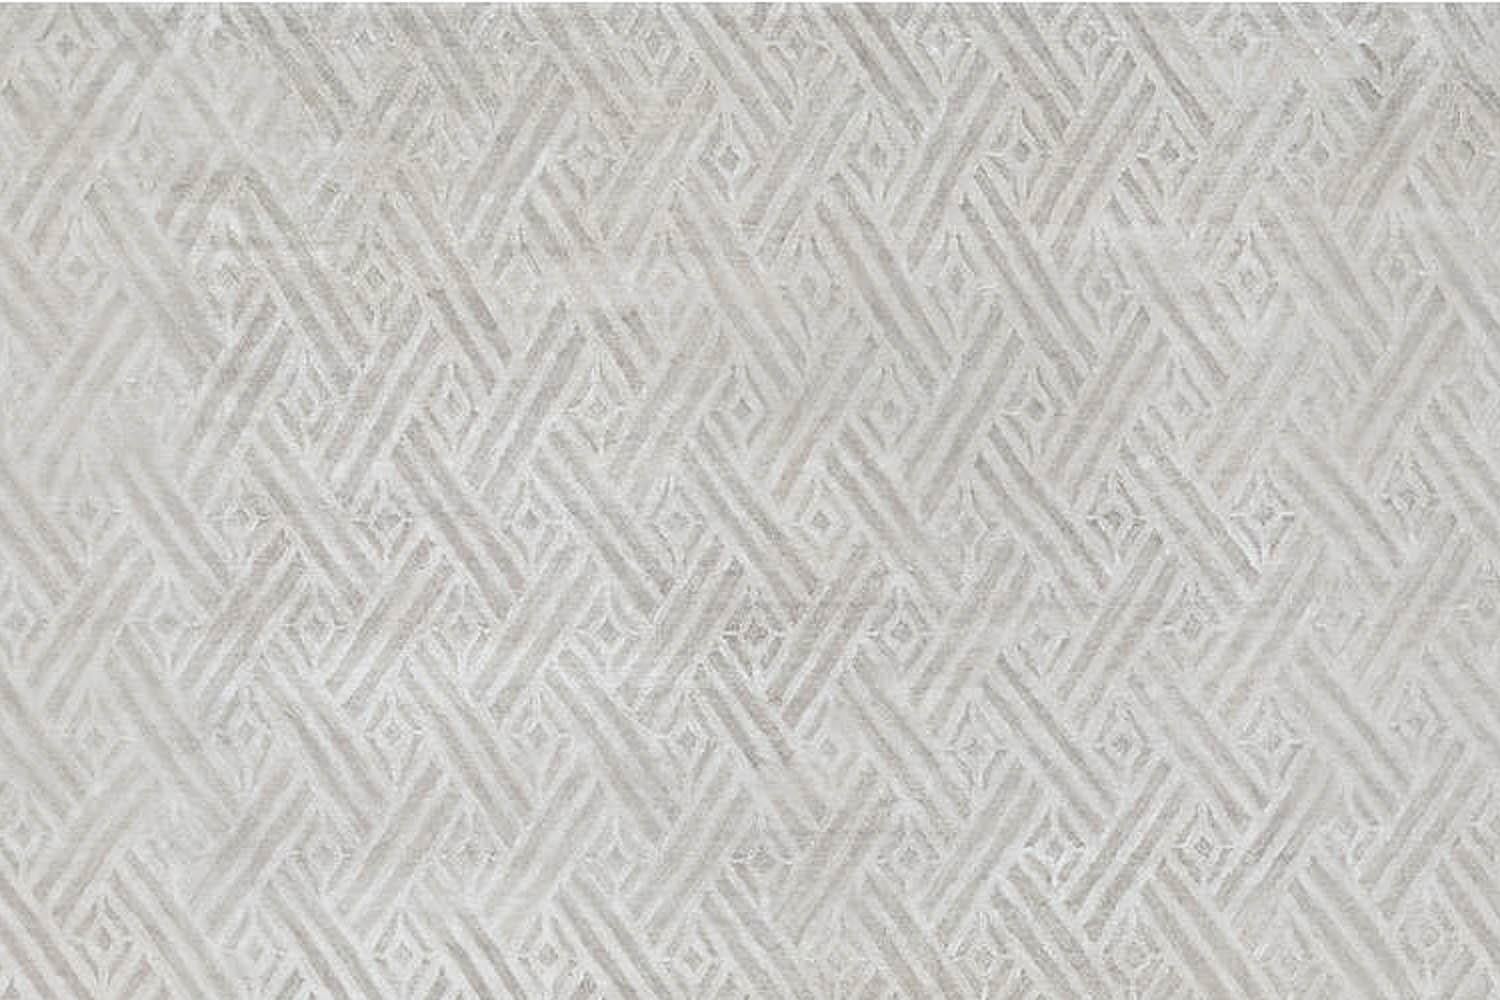 Modern Geometric rug by Doris Leslie Blau
Size: 16'10